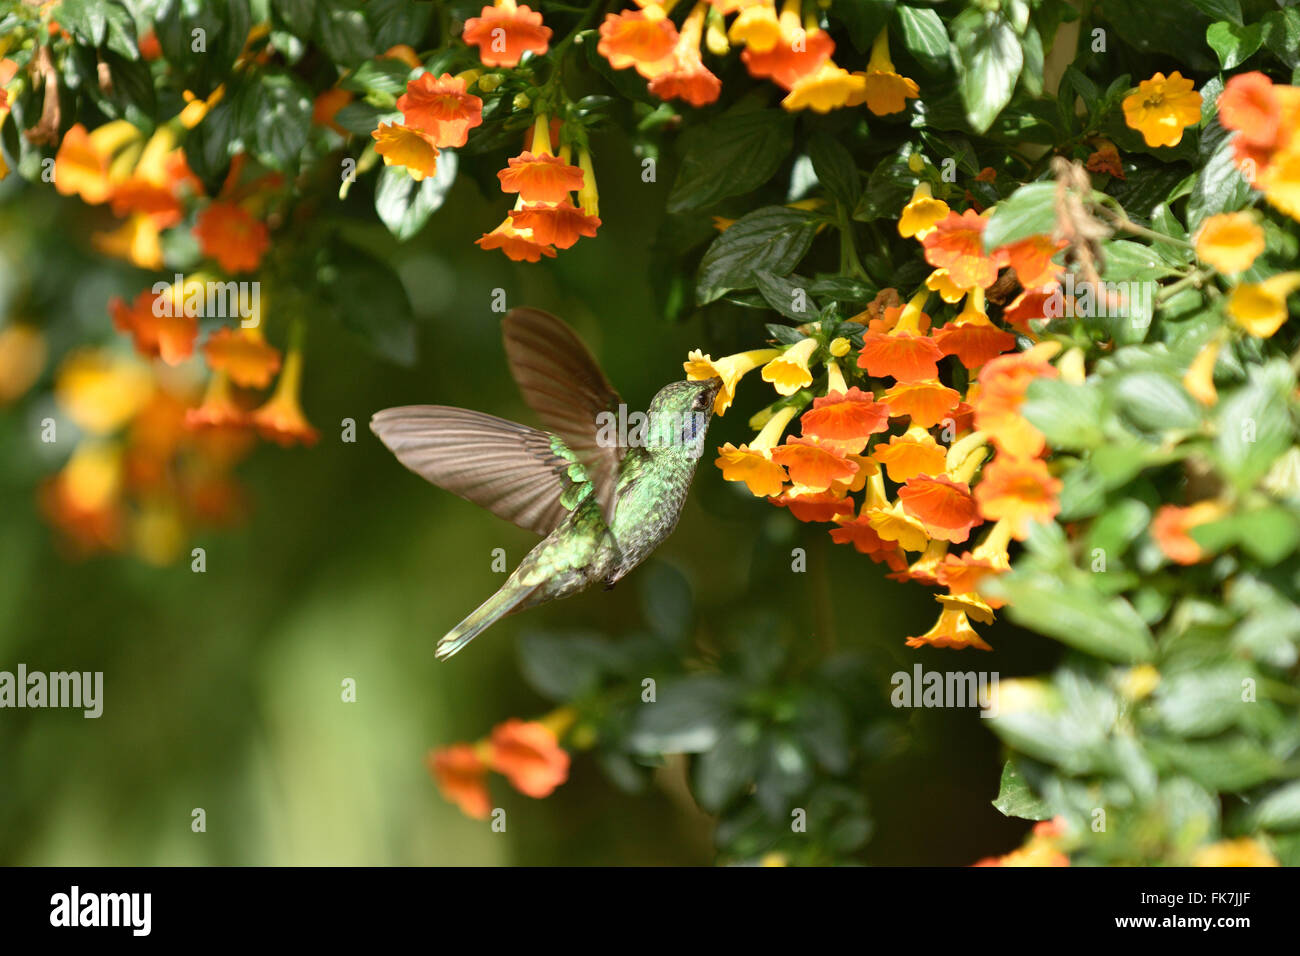 A Green Violetear hummingbird feeding from a flower. Stock Photo